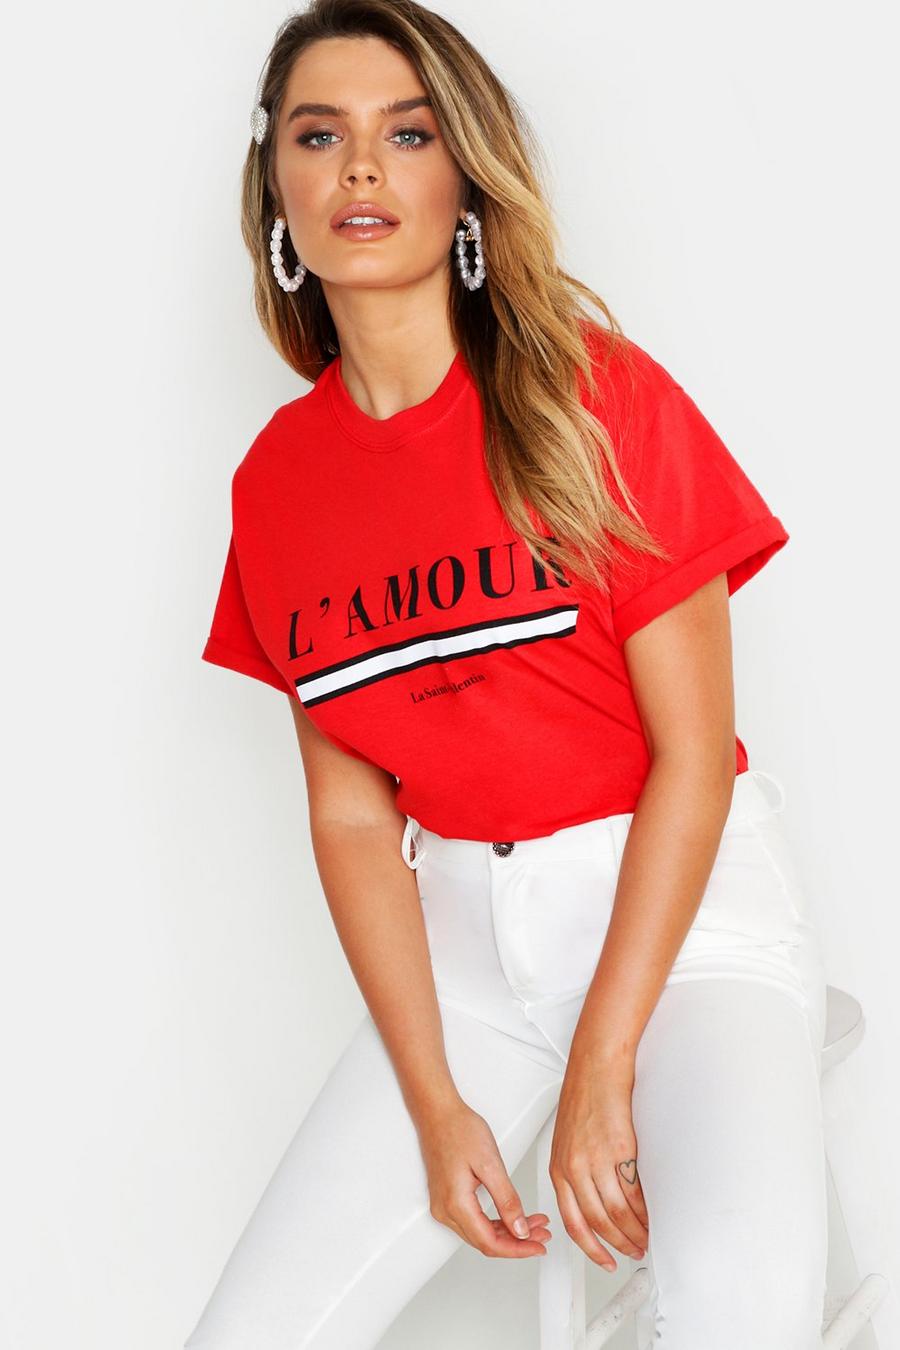 T-Shirt mit L'Amour Slogan, Rot red